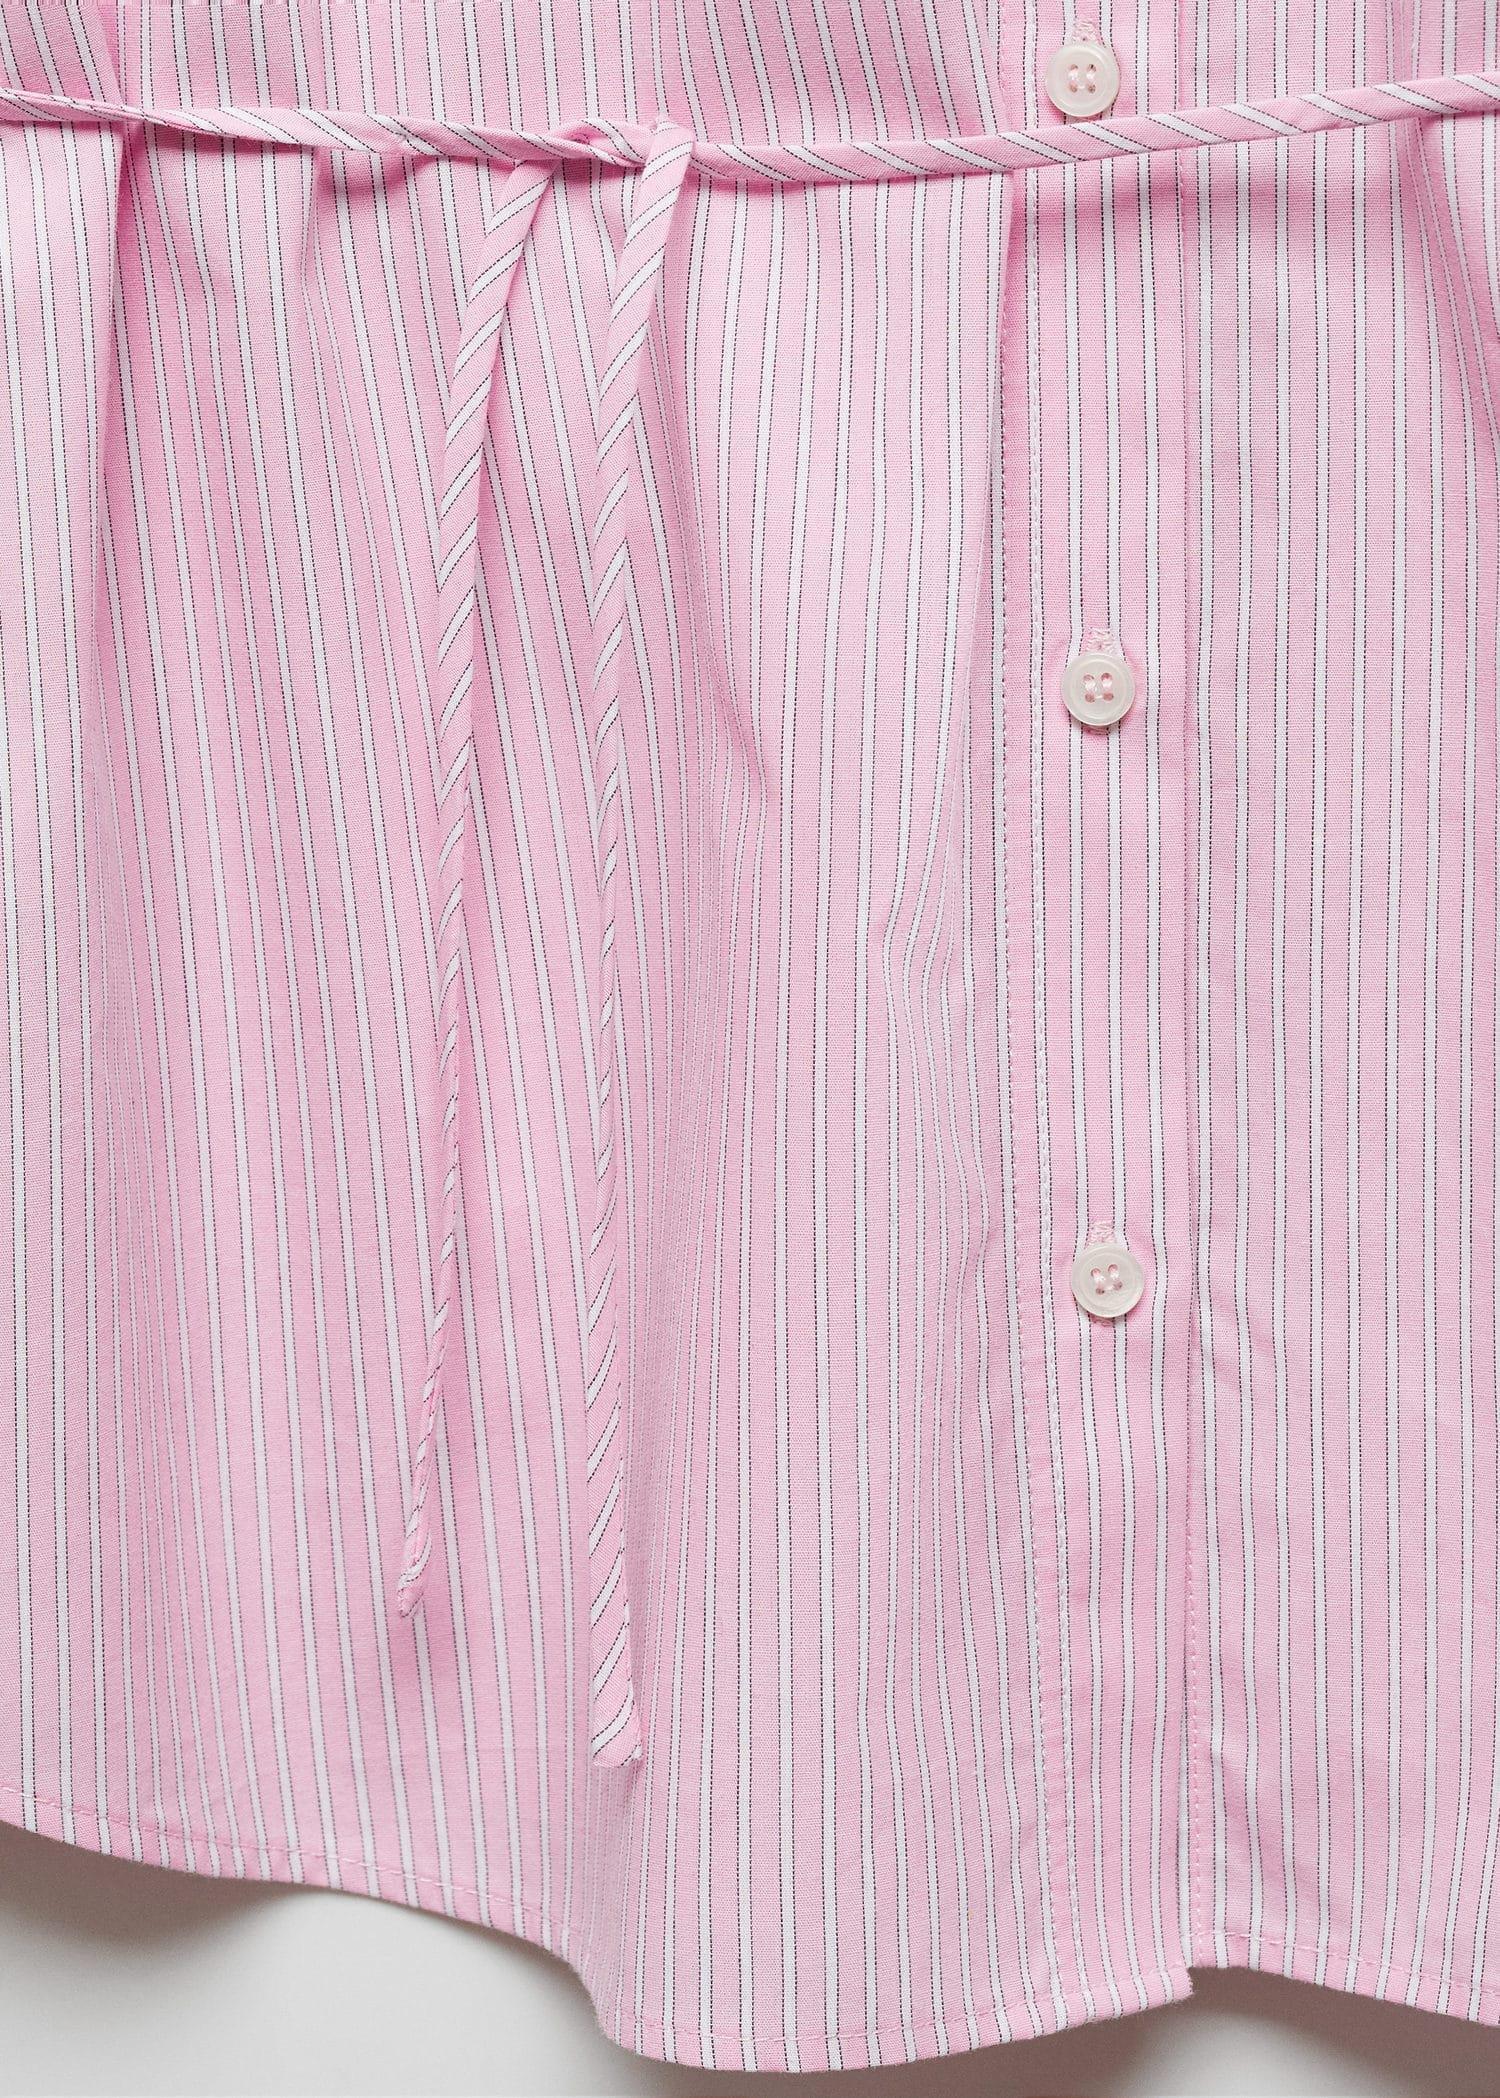 Mango - Pink Lt-Pastel Striped Bow Blouse